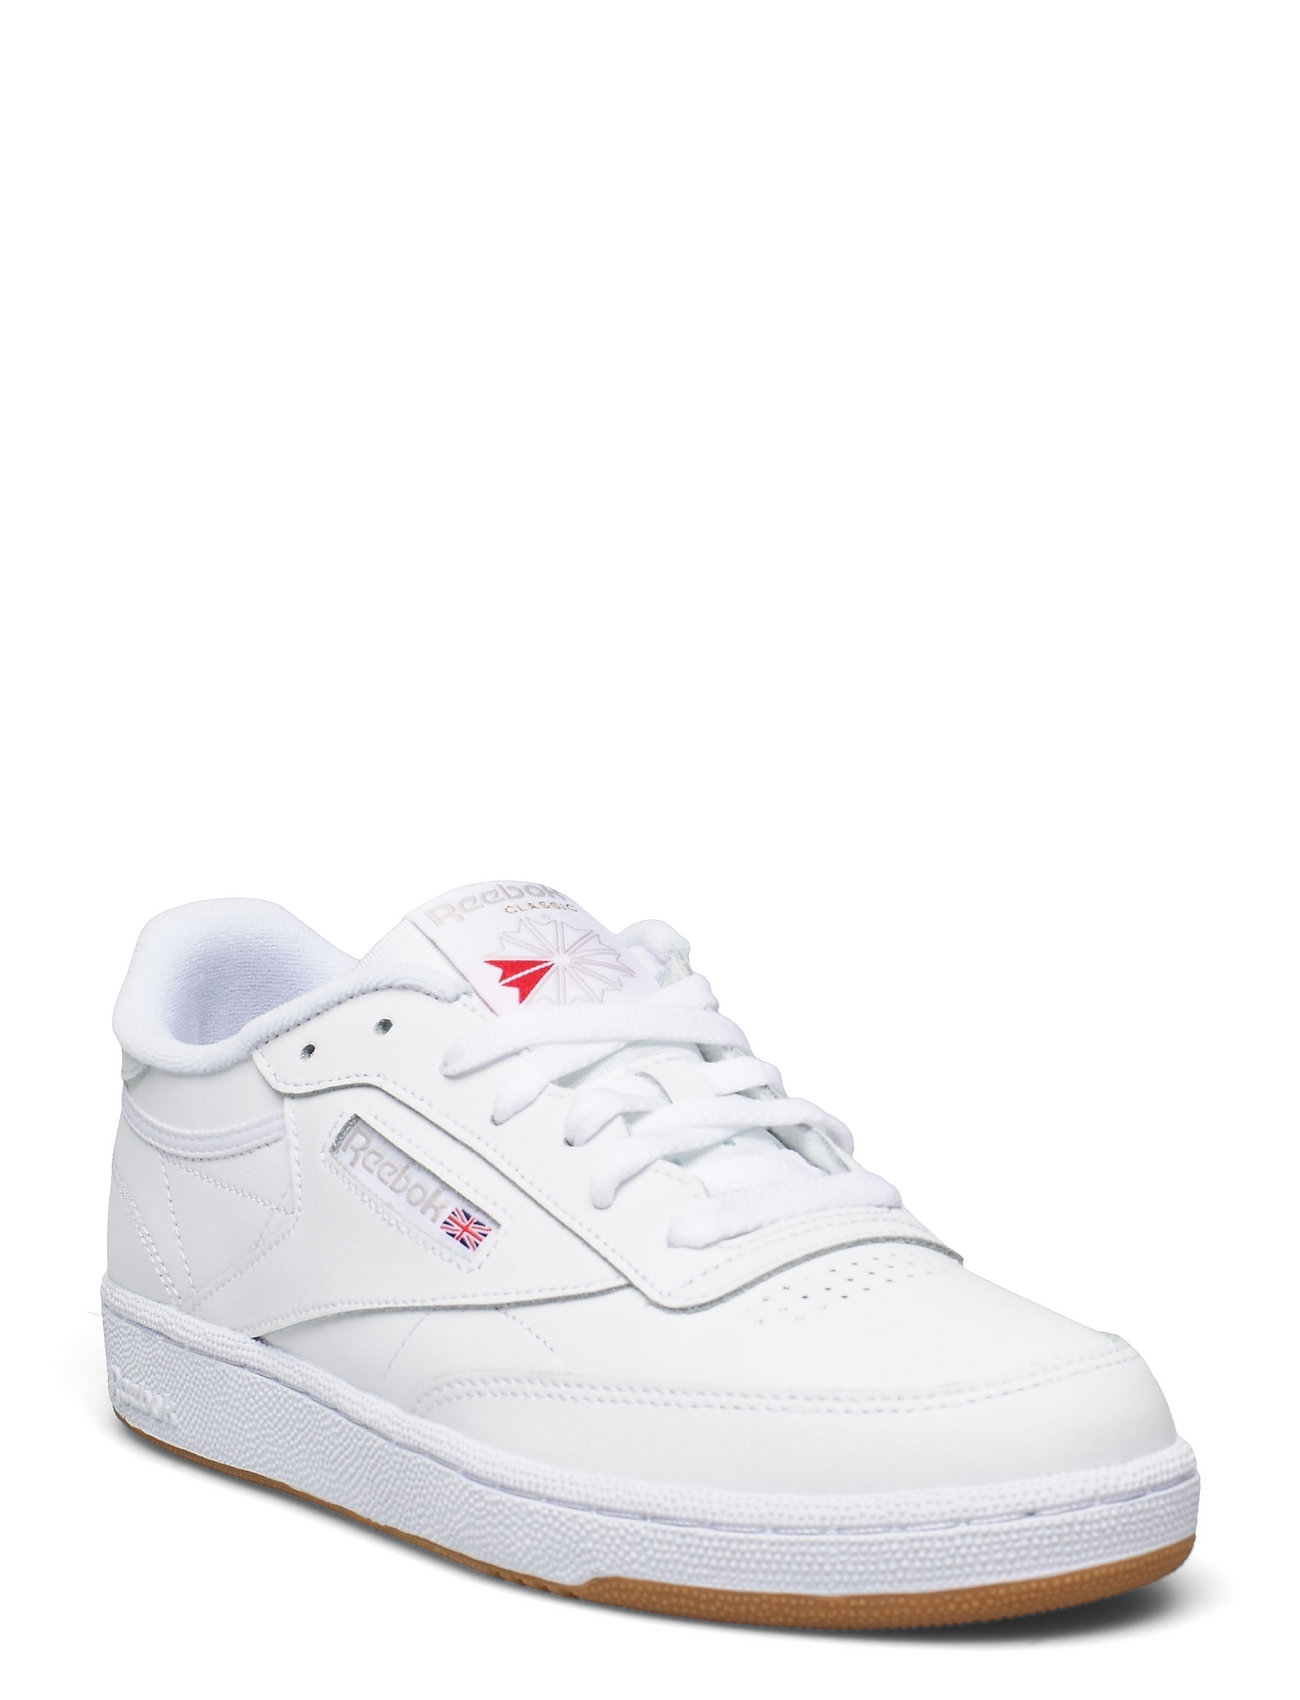 "Reebok Classics" "Club C 85 Low-top Sneakers White Reebok